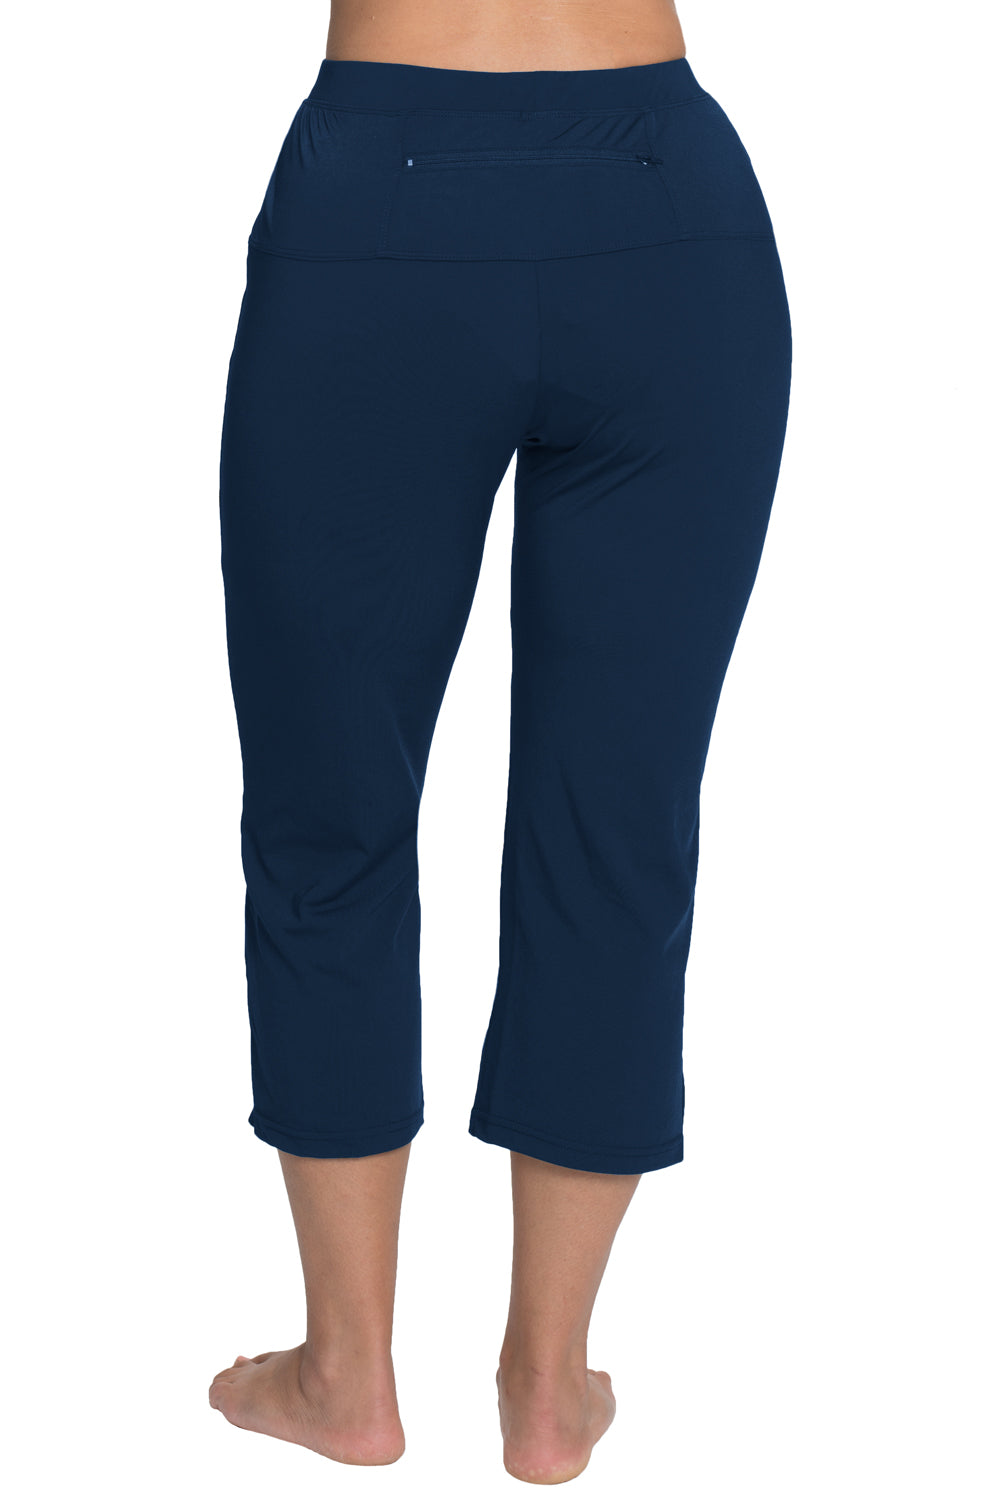 Innerwin Cropped Pant High Waist Women Capri Pants Beach Button Lounge  Capris Denim Blue S 